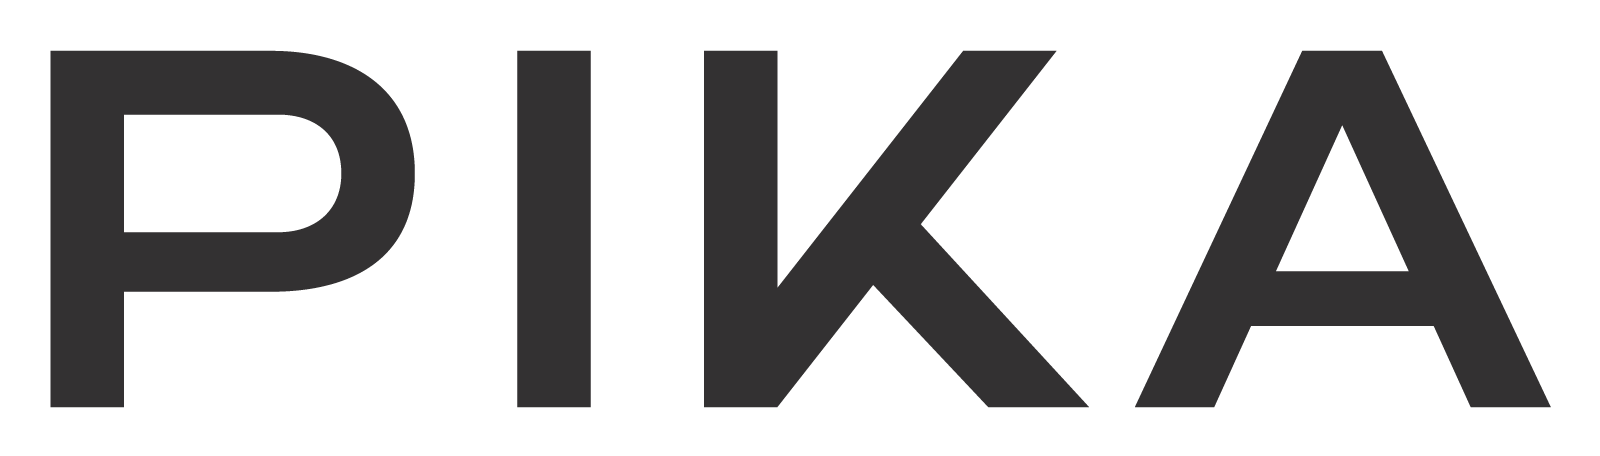 PIKA FAQ logo